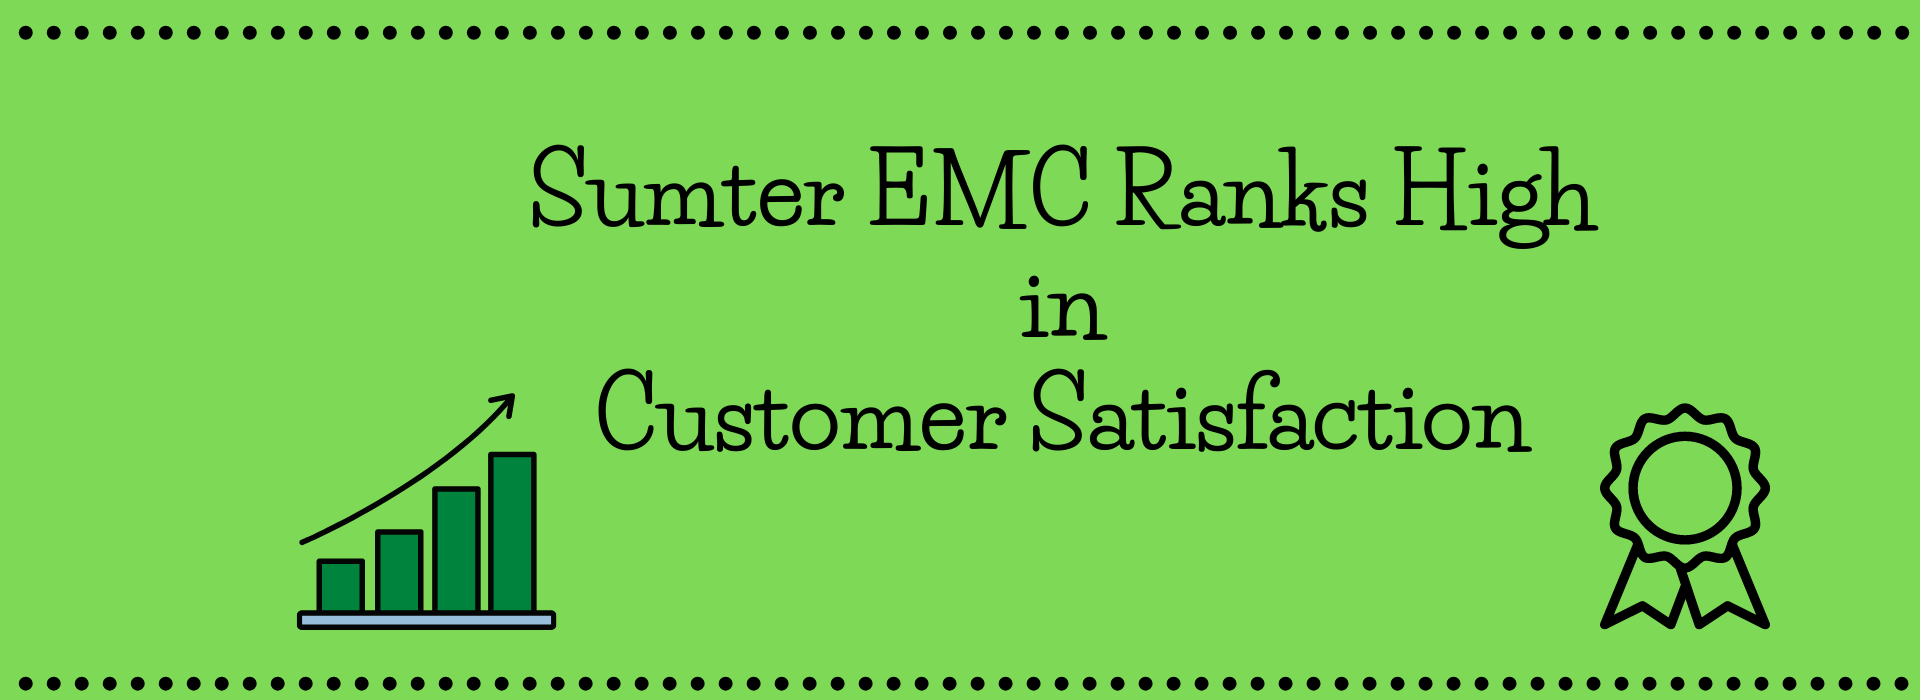 Sumter EMC Ranks High in Customer Satisfaction